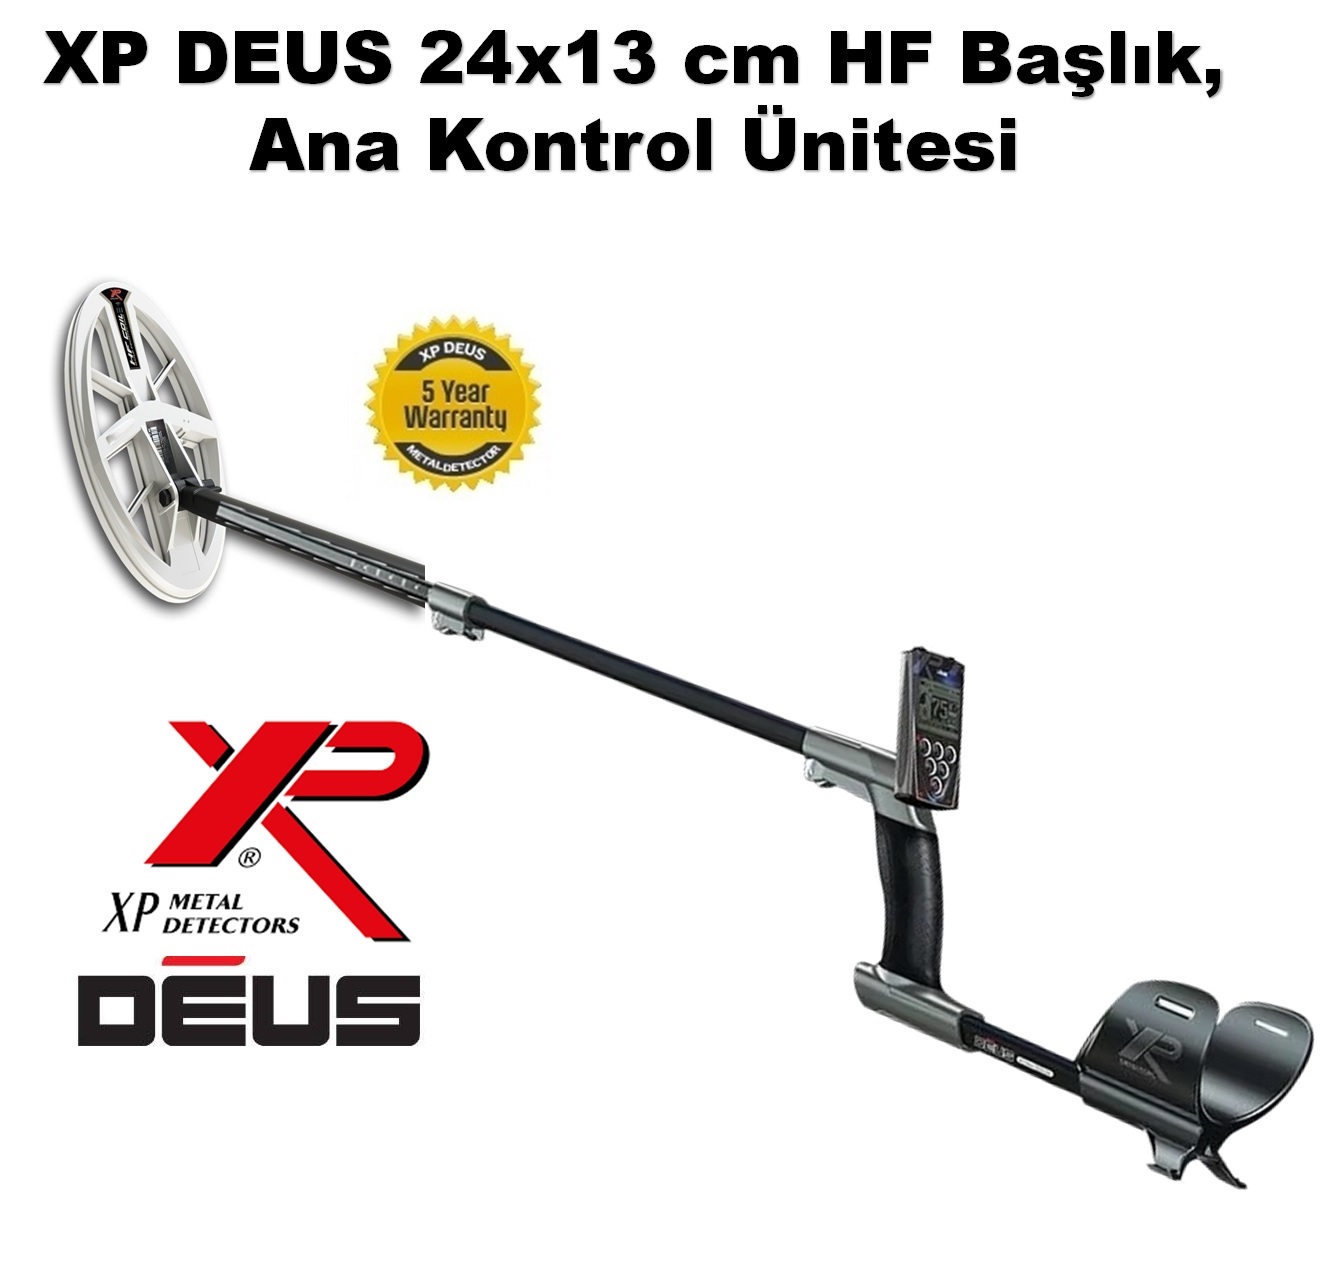 XP DEUS - 24x13cm HF Başlık, Ana Kontrol Ünitesi (RC)